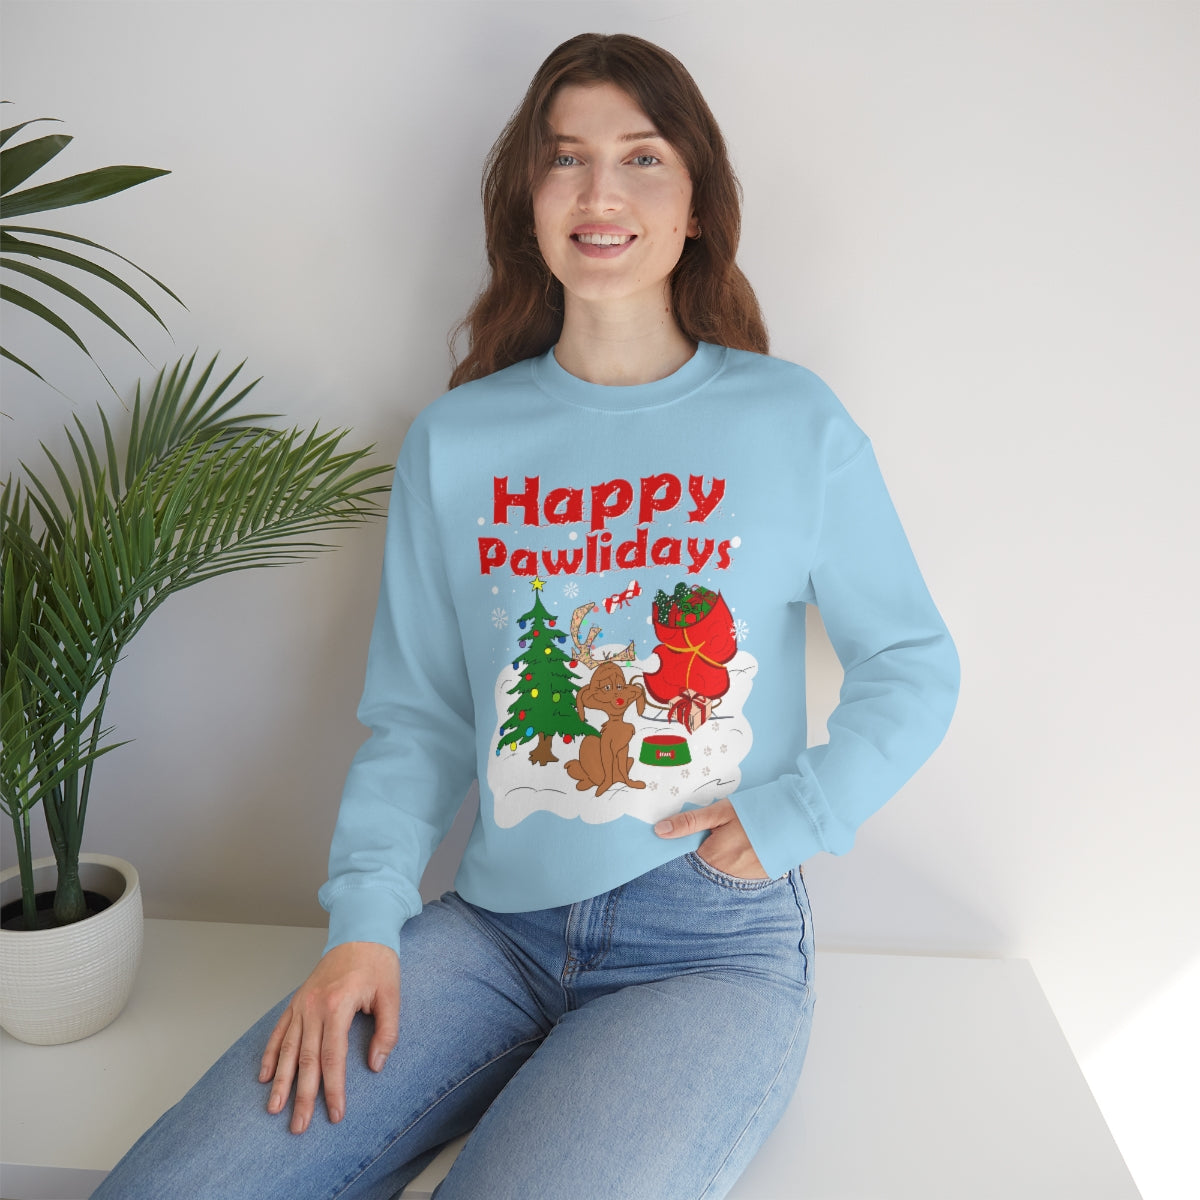 Max Happy Pawlidays Adult Unisex Crewneck Sweatshirt